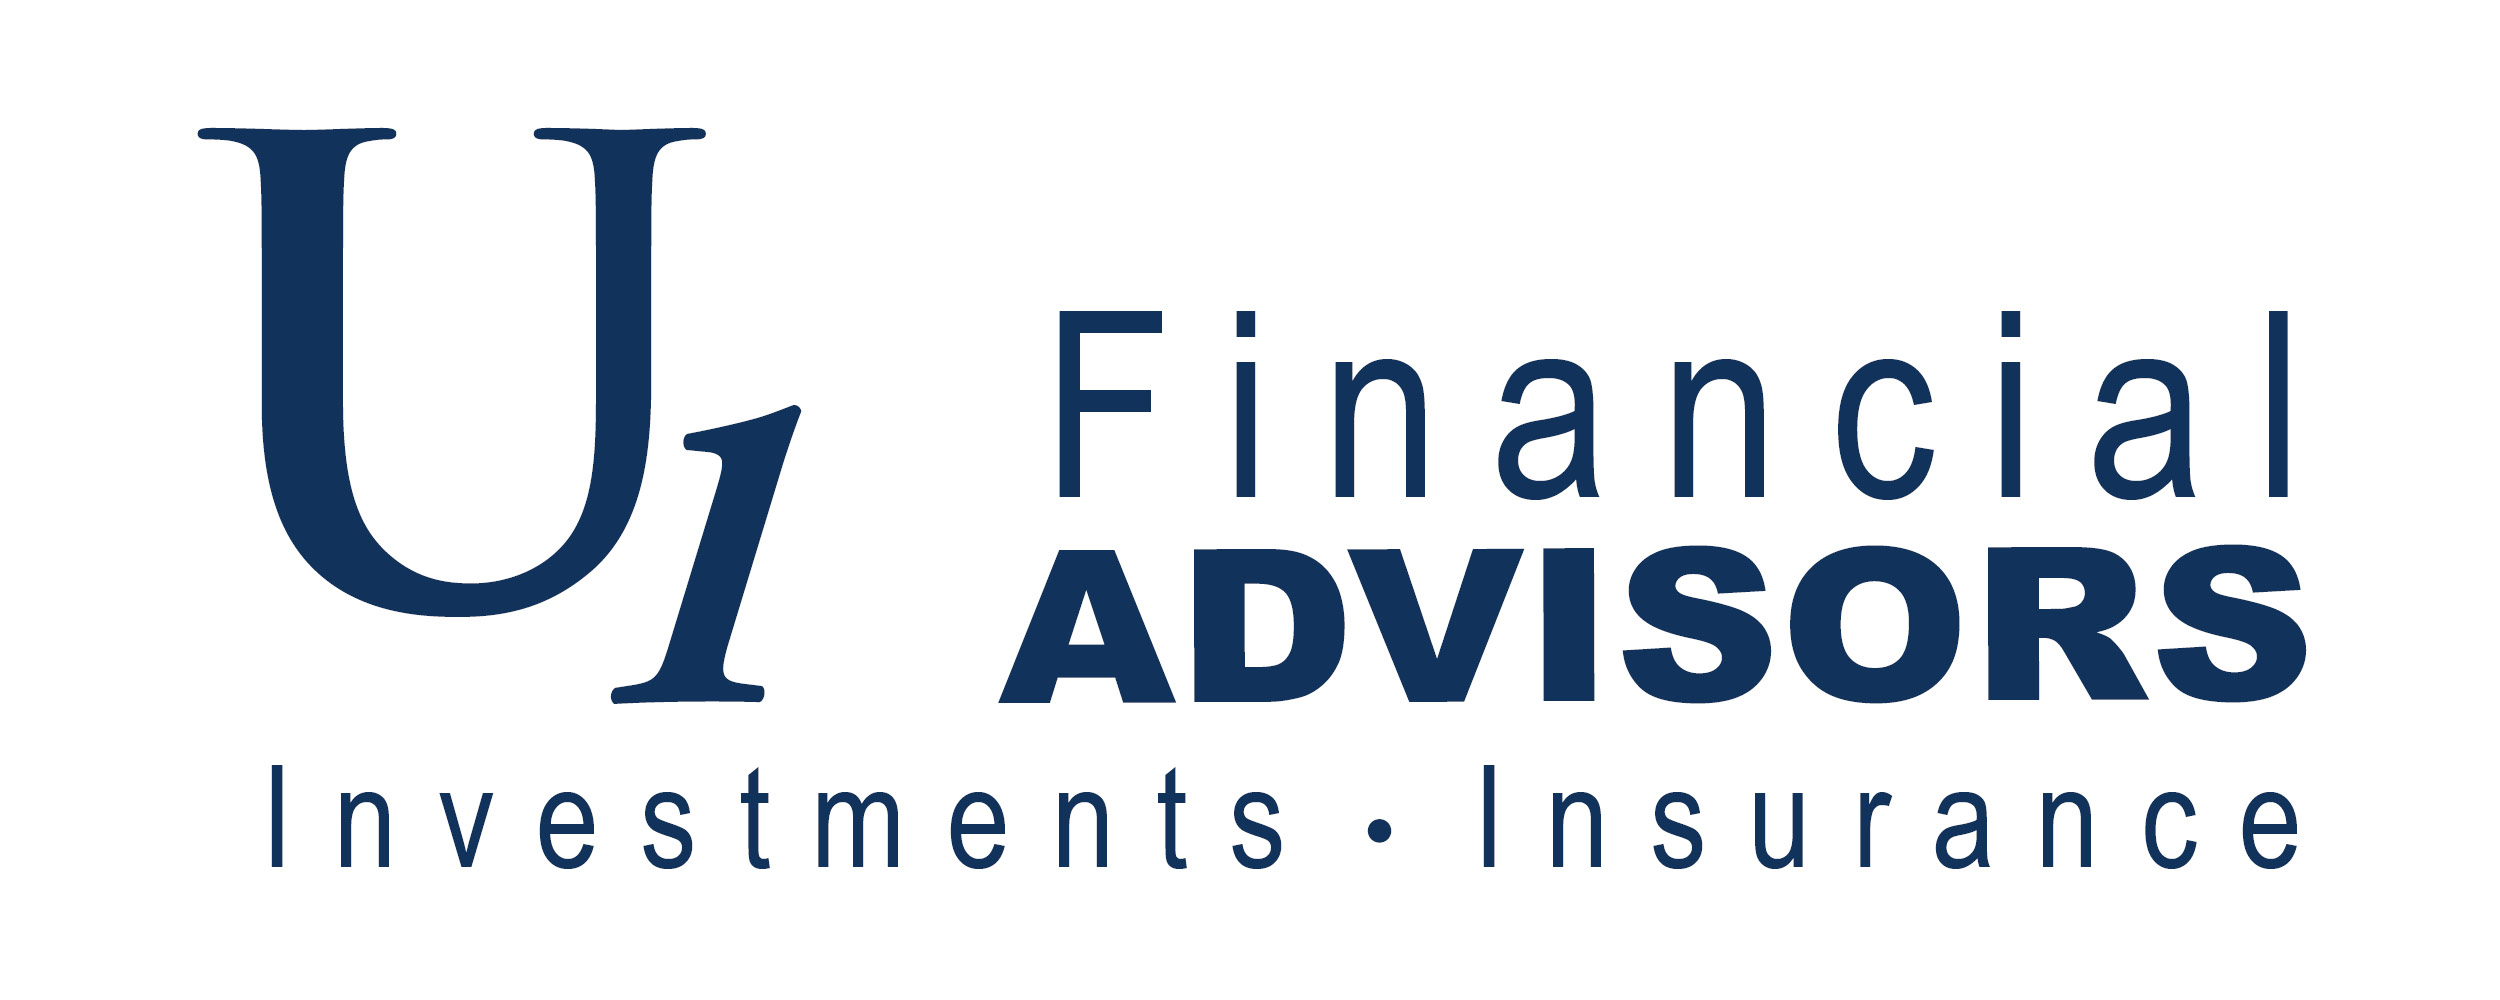 Universal 1 Financial Advisors